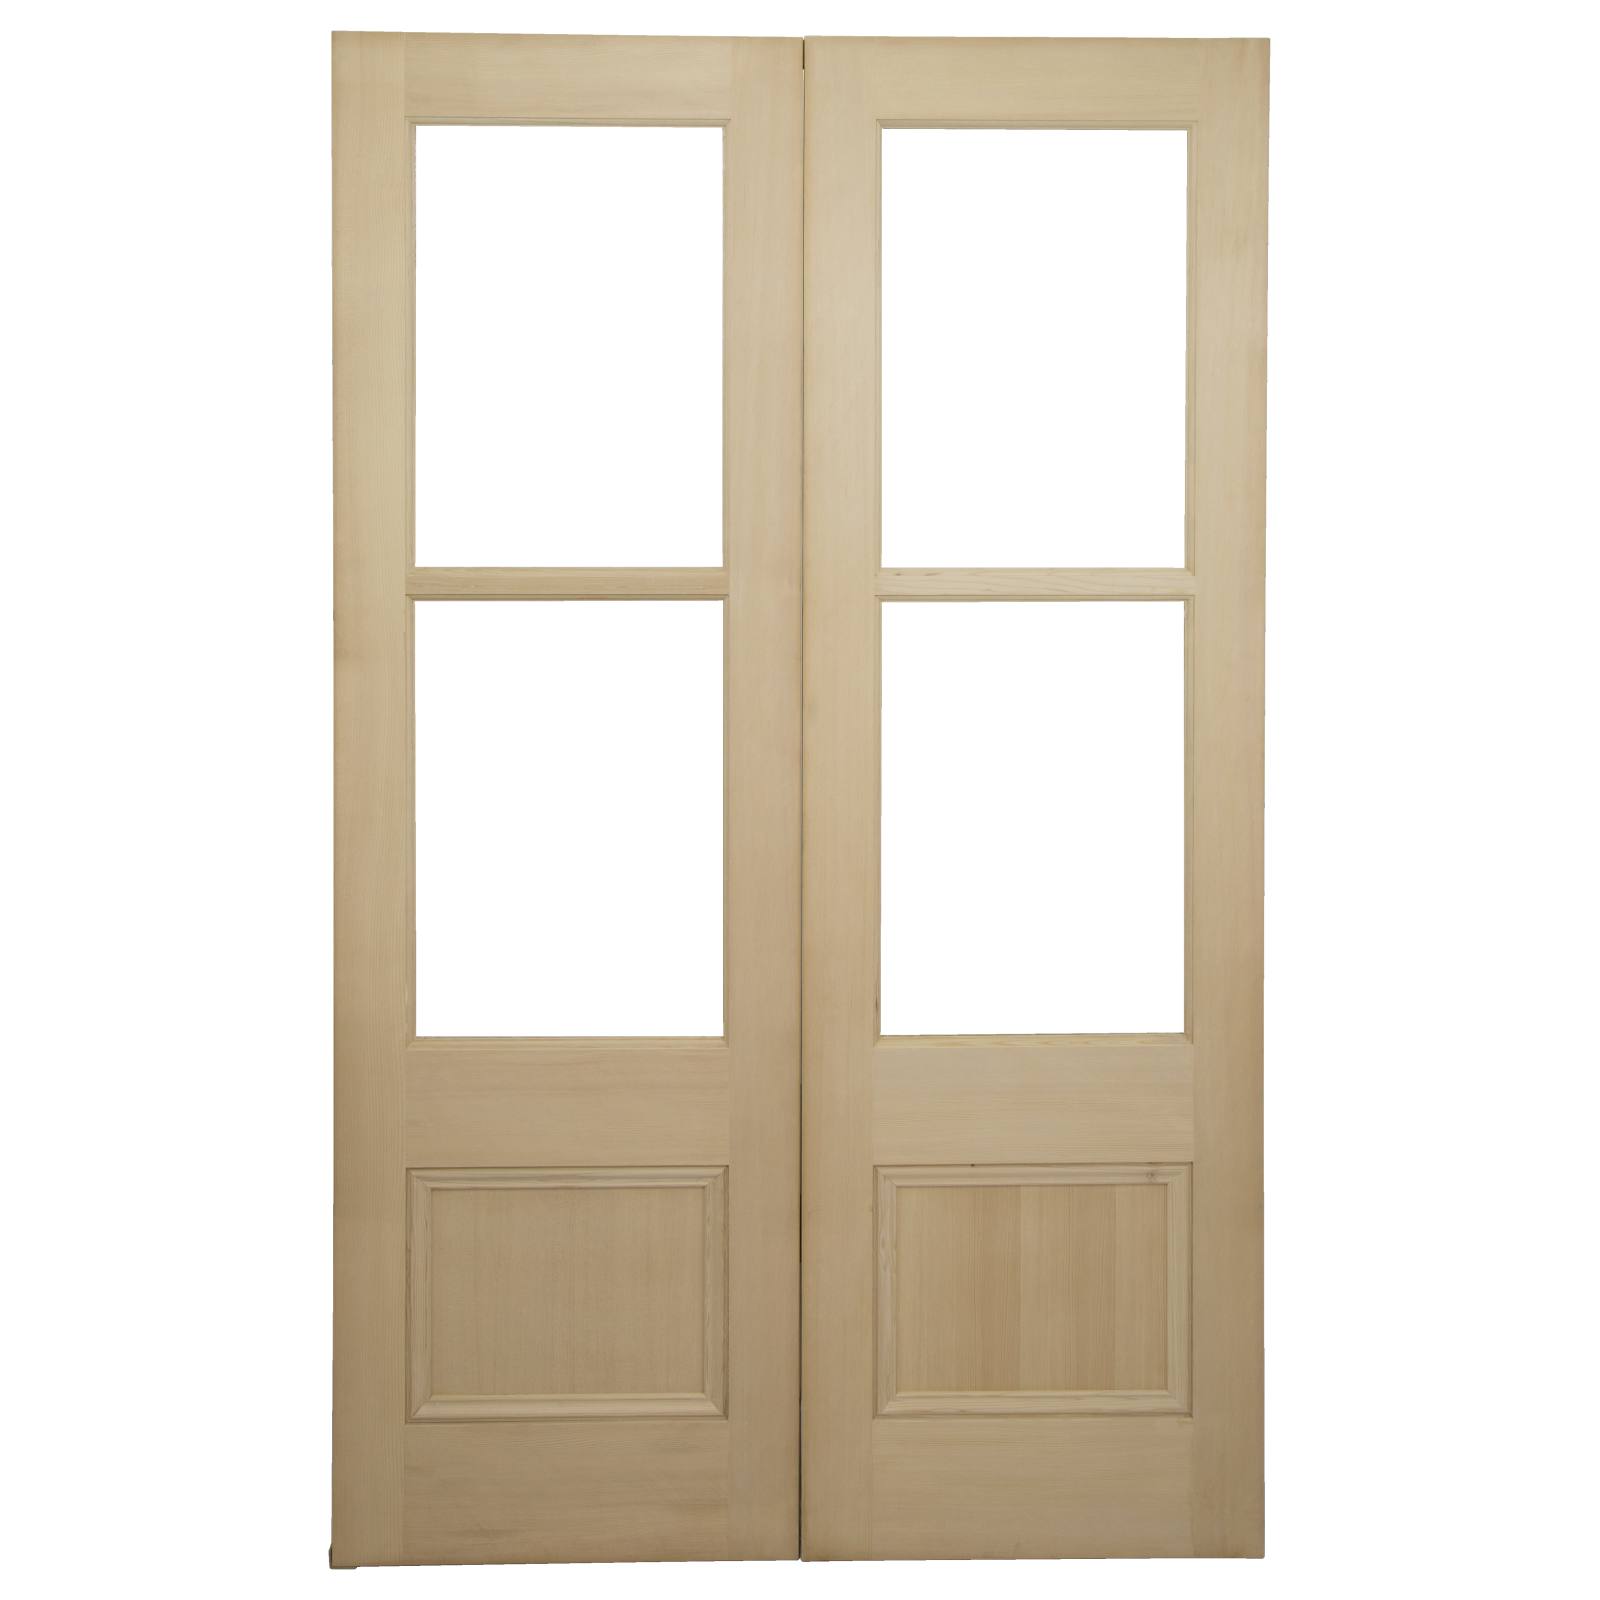 Pair of Internal Glazed French 62cm Doors, Raw HV